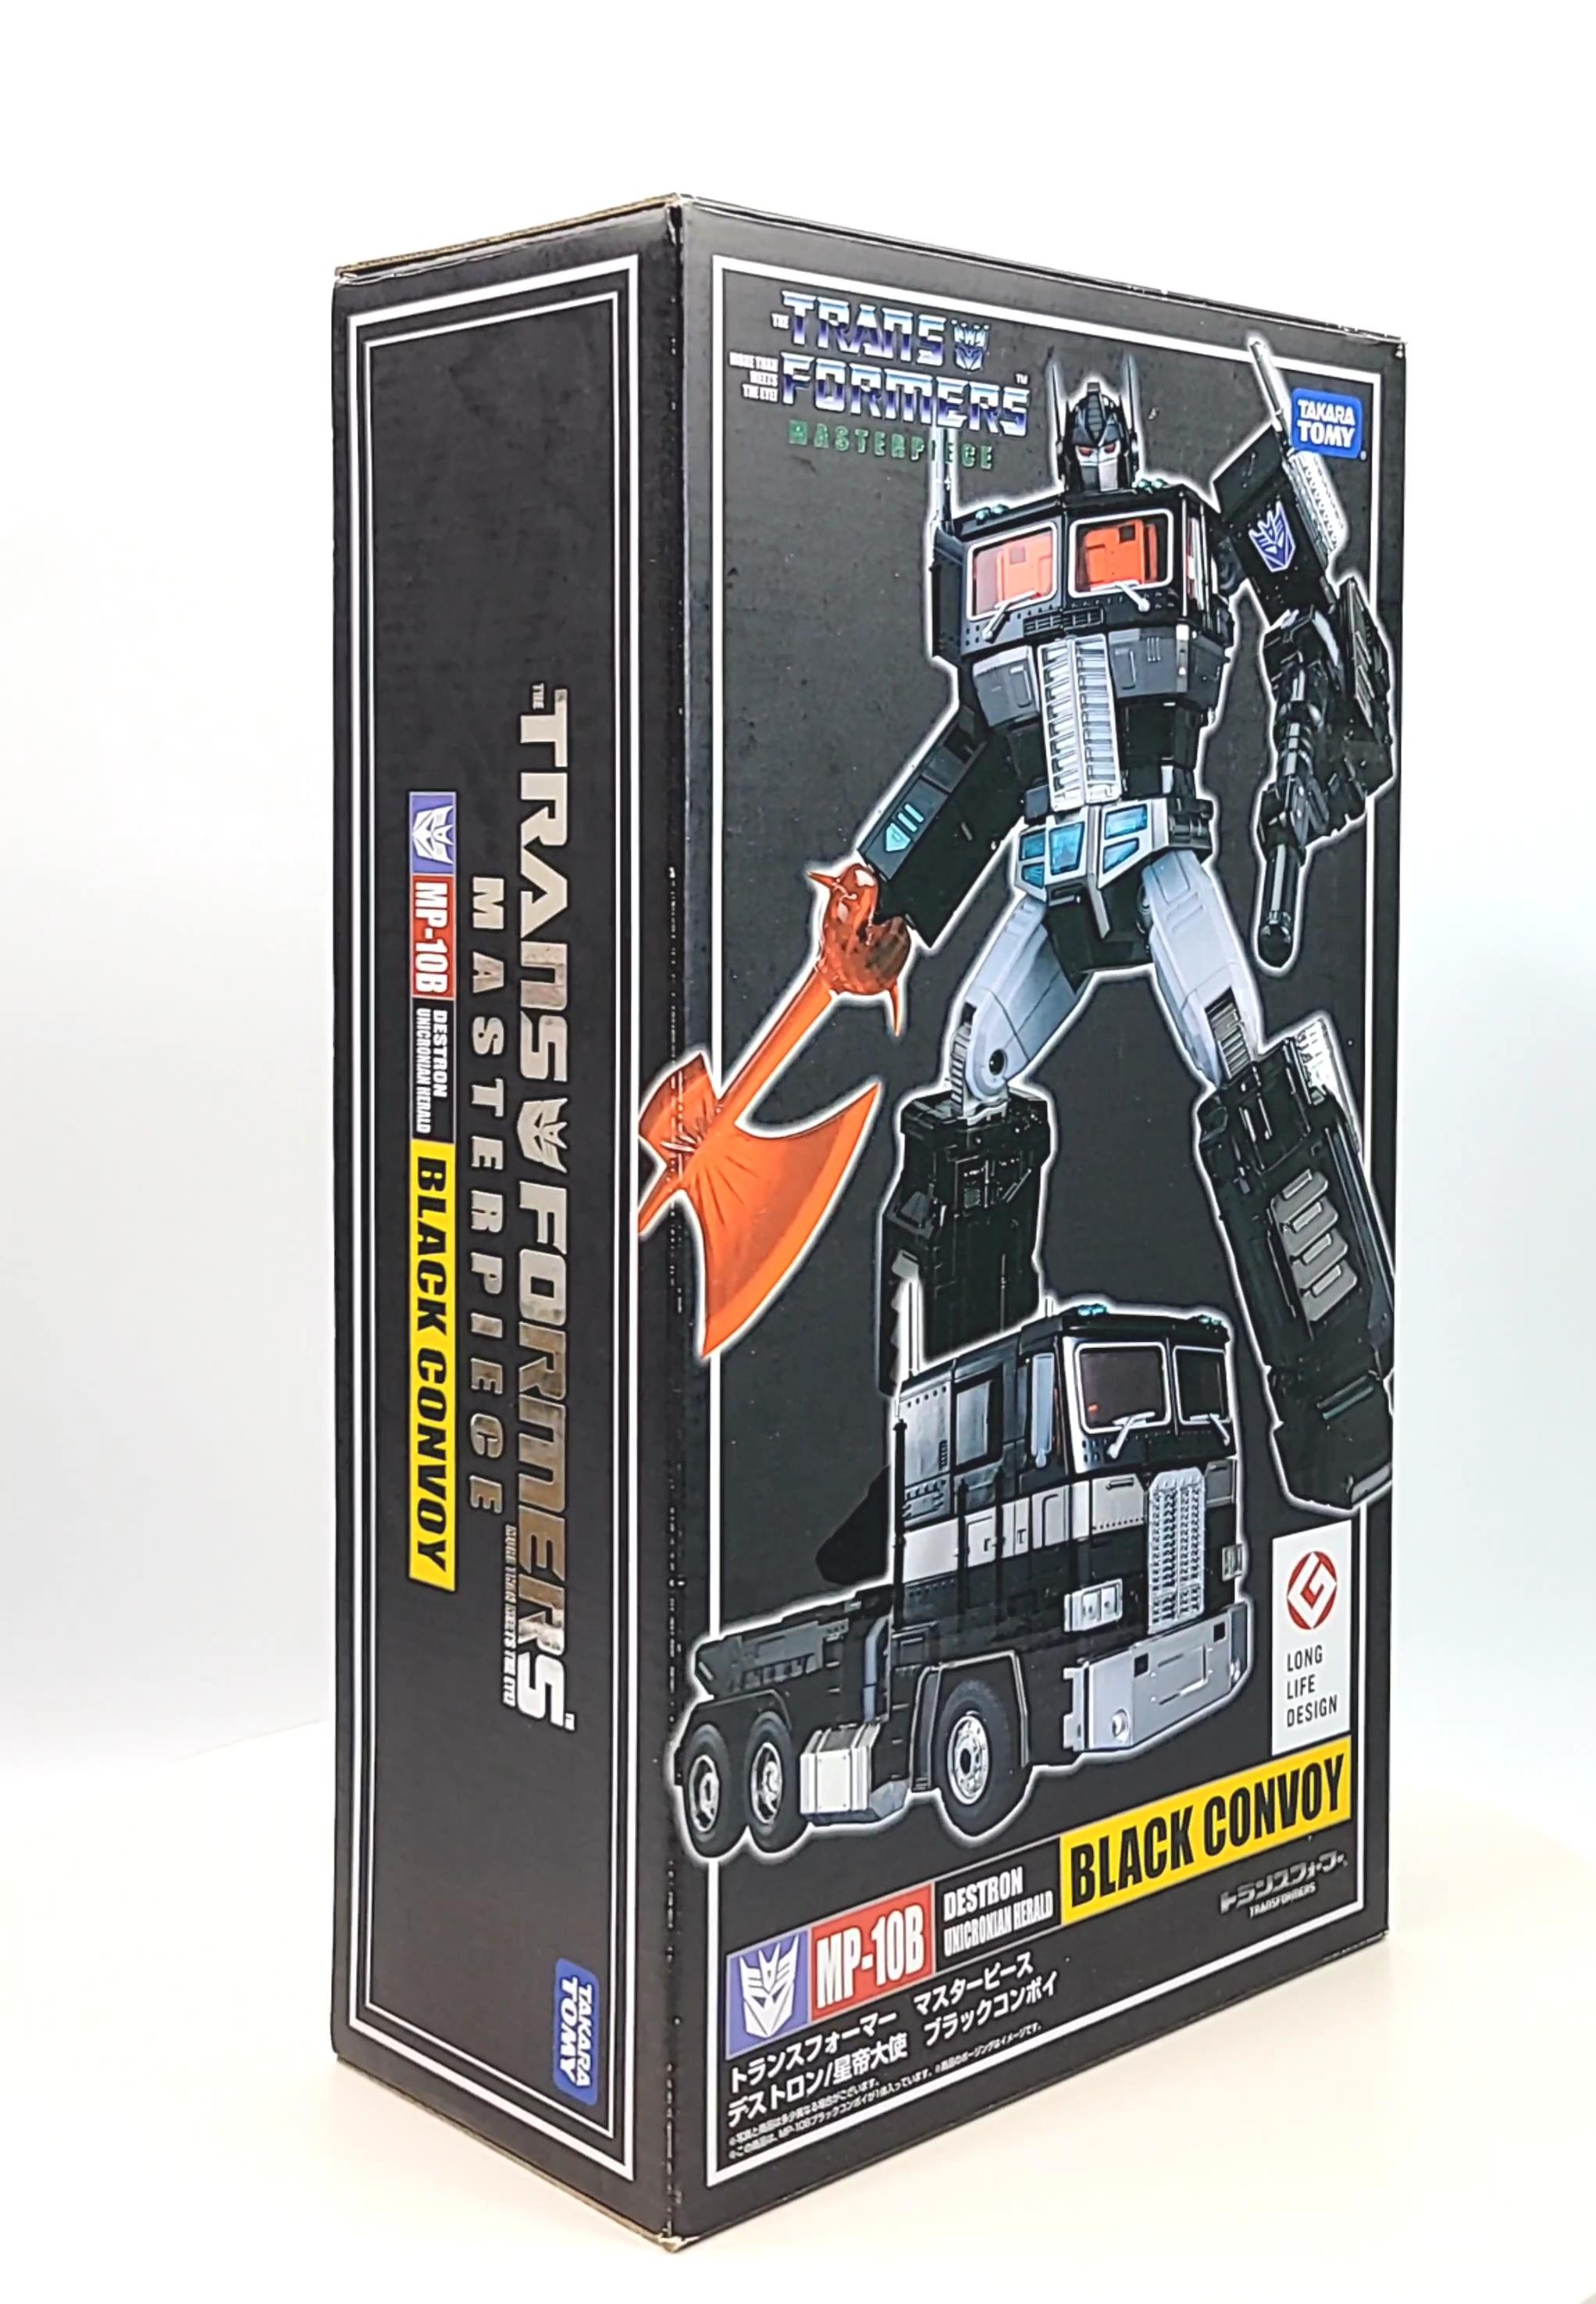 Transformers Masterpiece MP 10B Black Convoy BOX ONLY - NO FIGURE